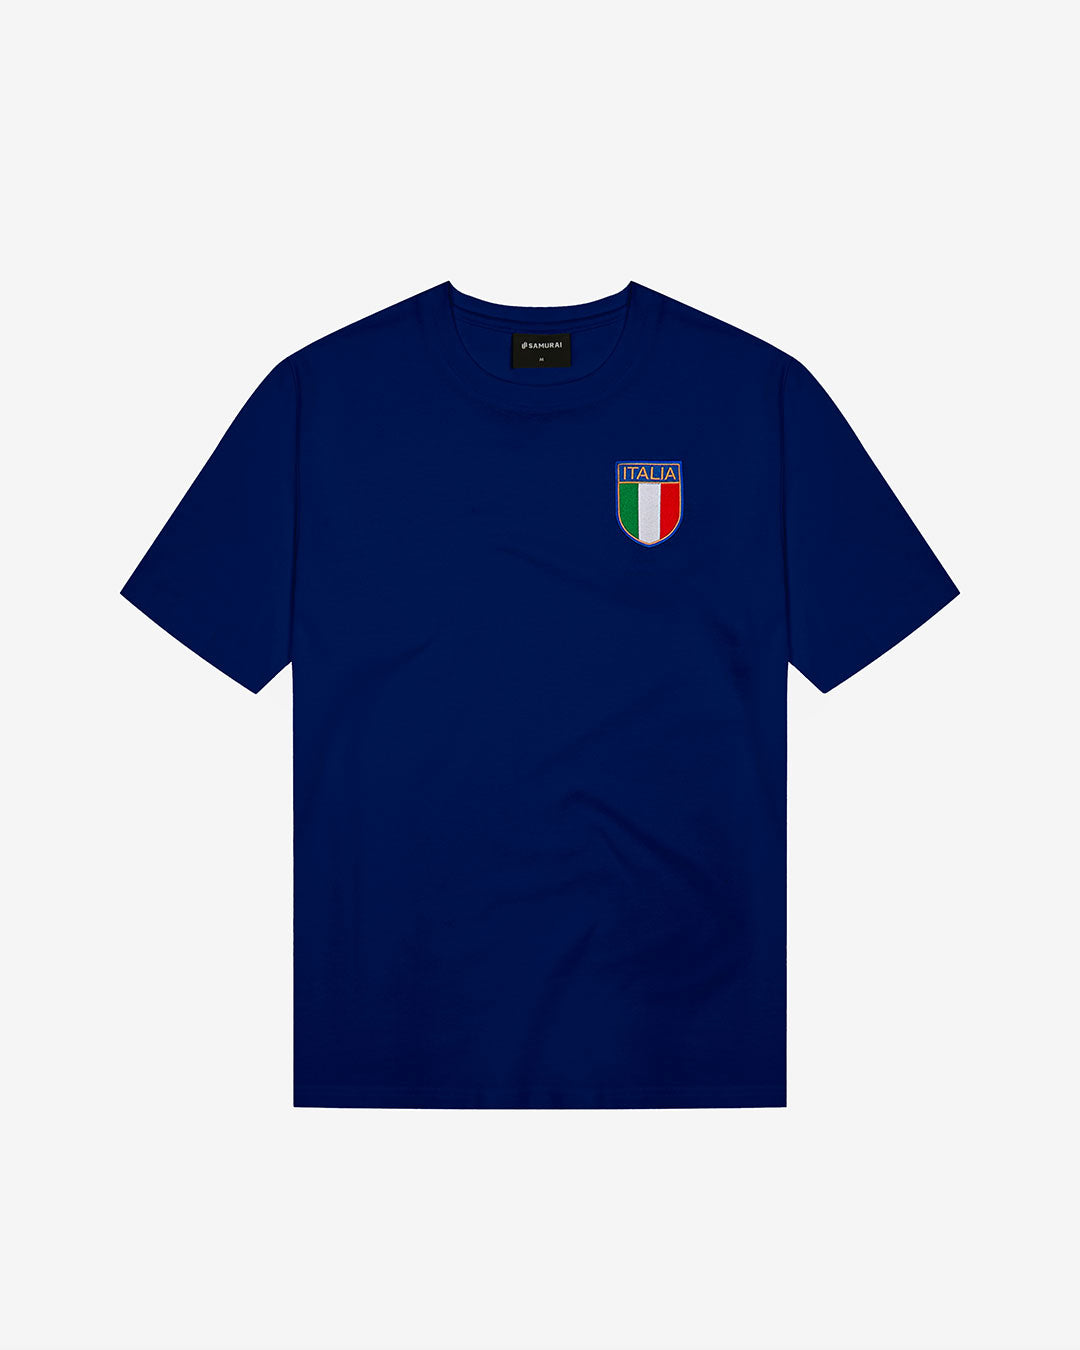 VC: ITA - Women's Vintage T-Shirt - Italy